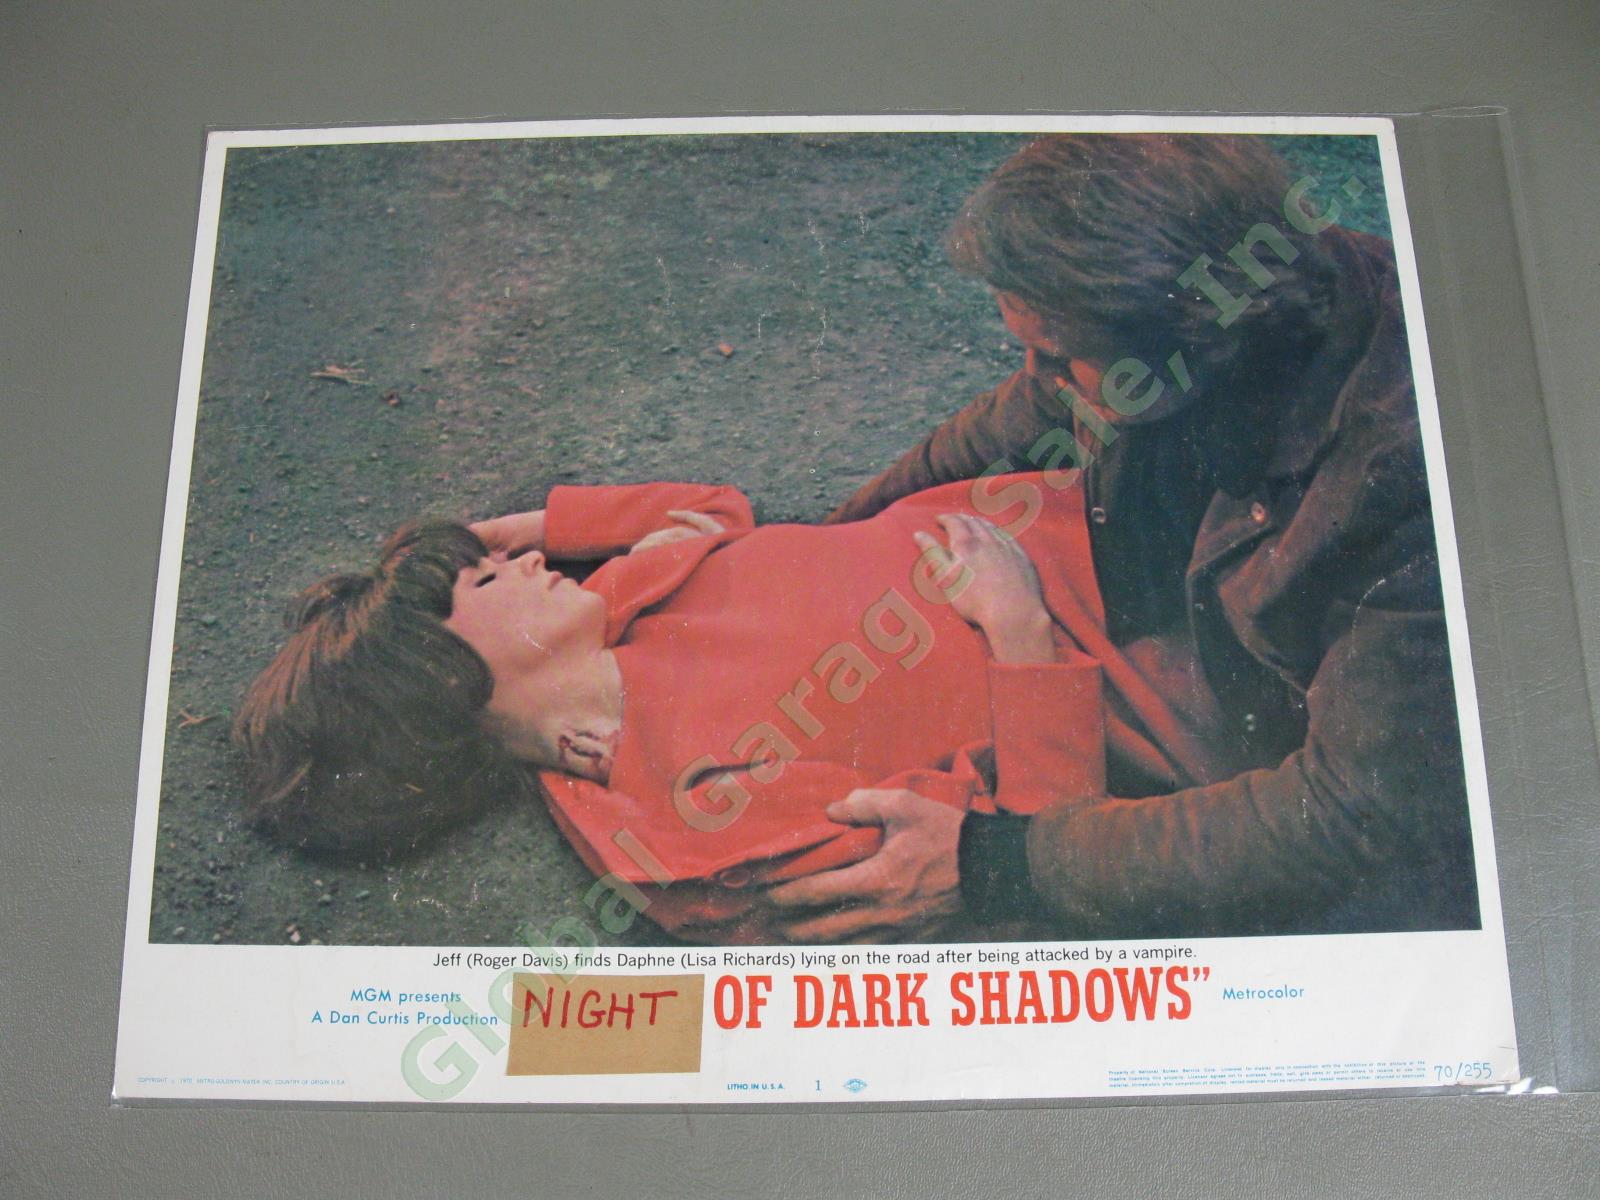 16 Vintage 1940s-1970s Lobby Card Lot Sci-Fi Buck Rogers House of Dark Shadows + 10